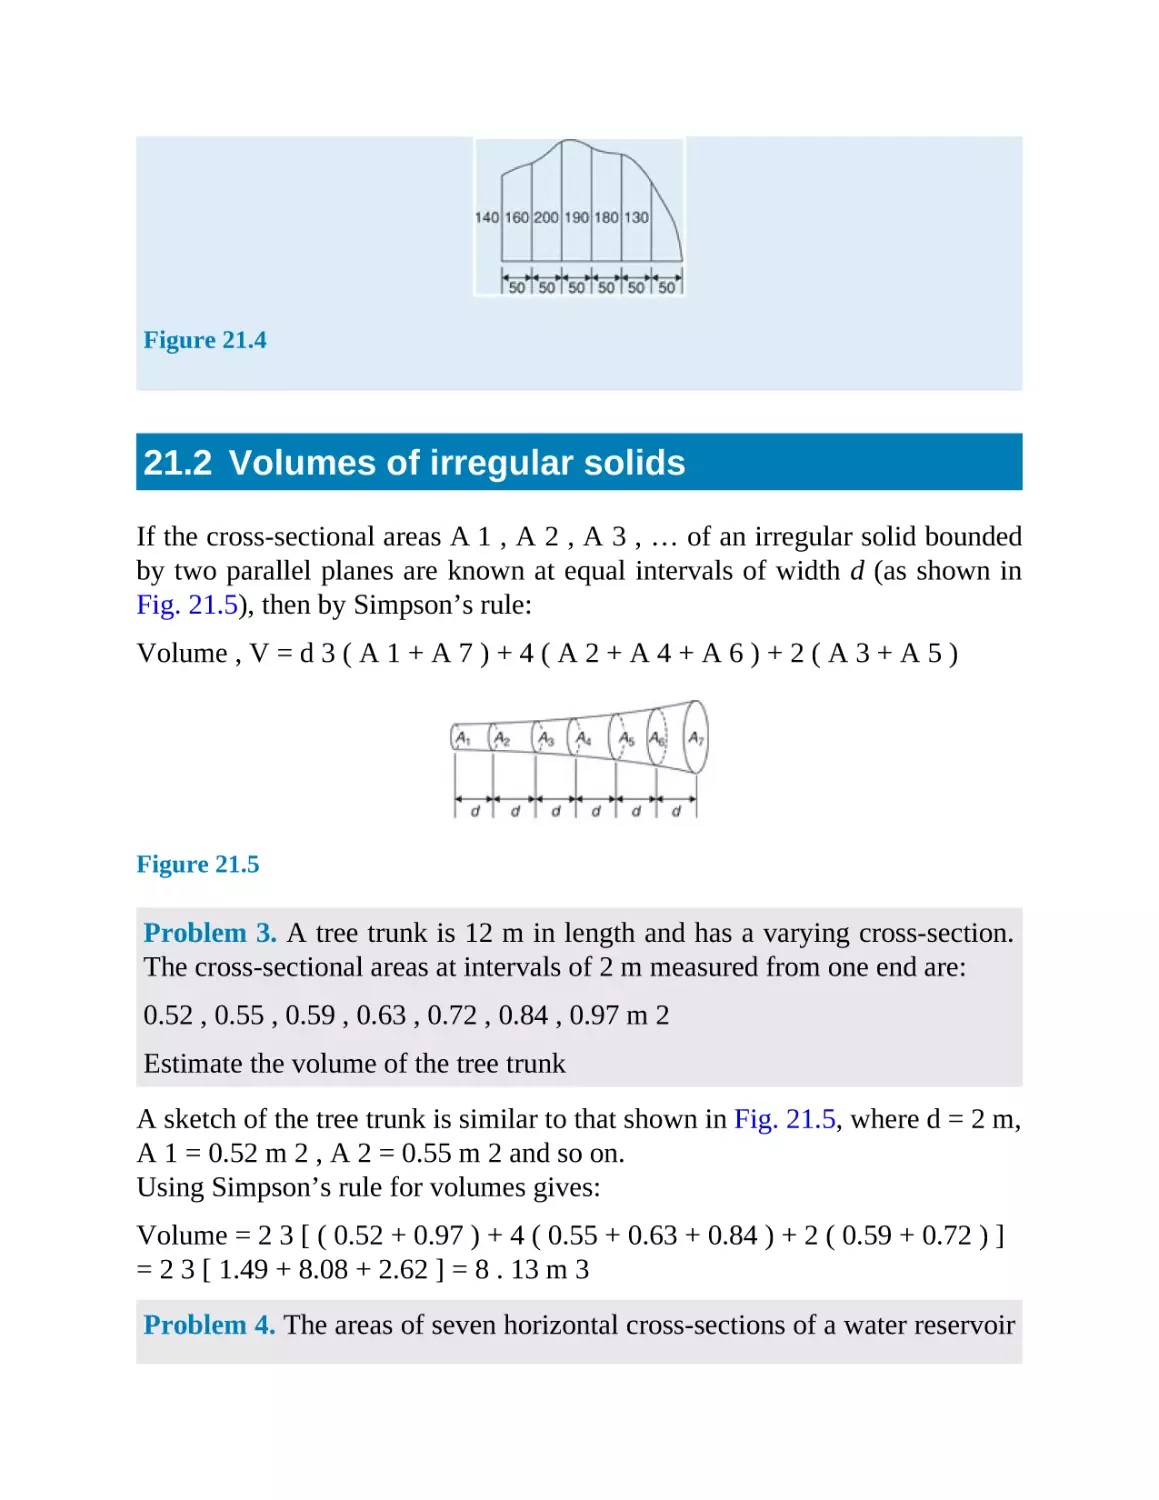 21.2 Volumes of irregular solids